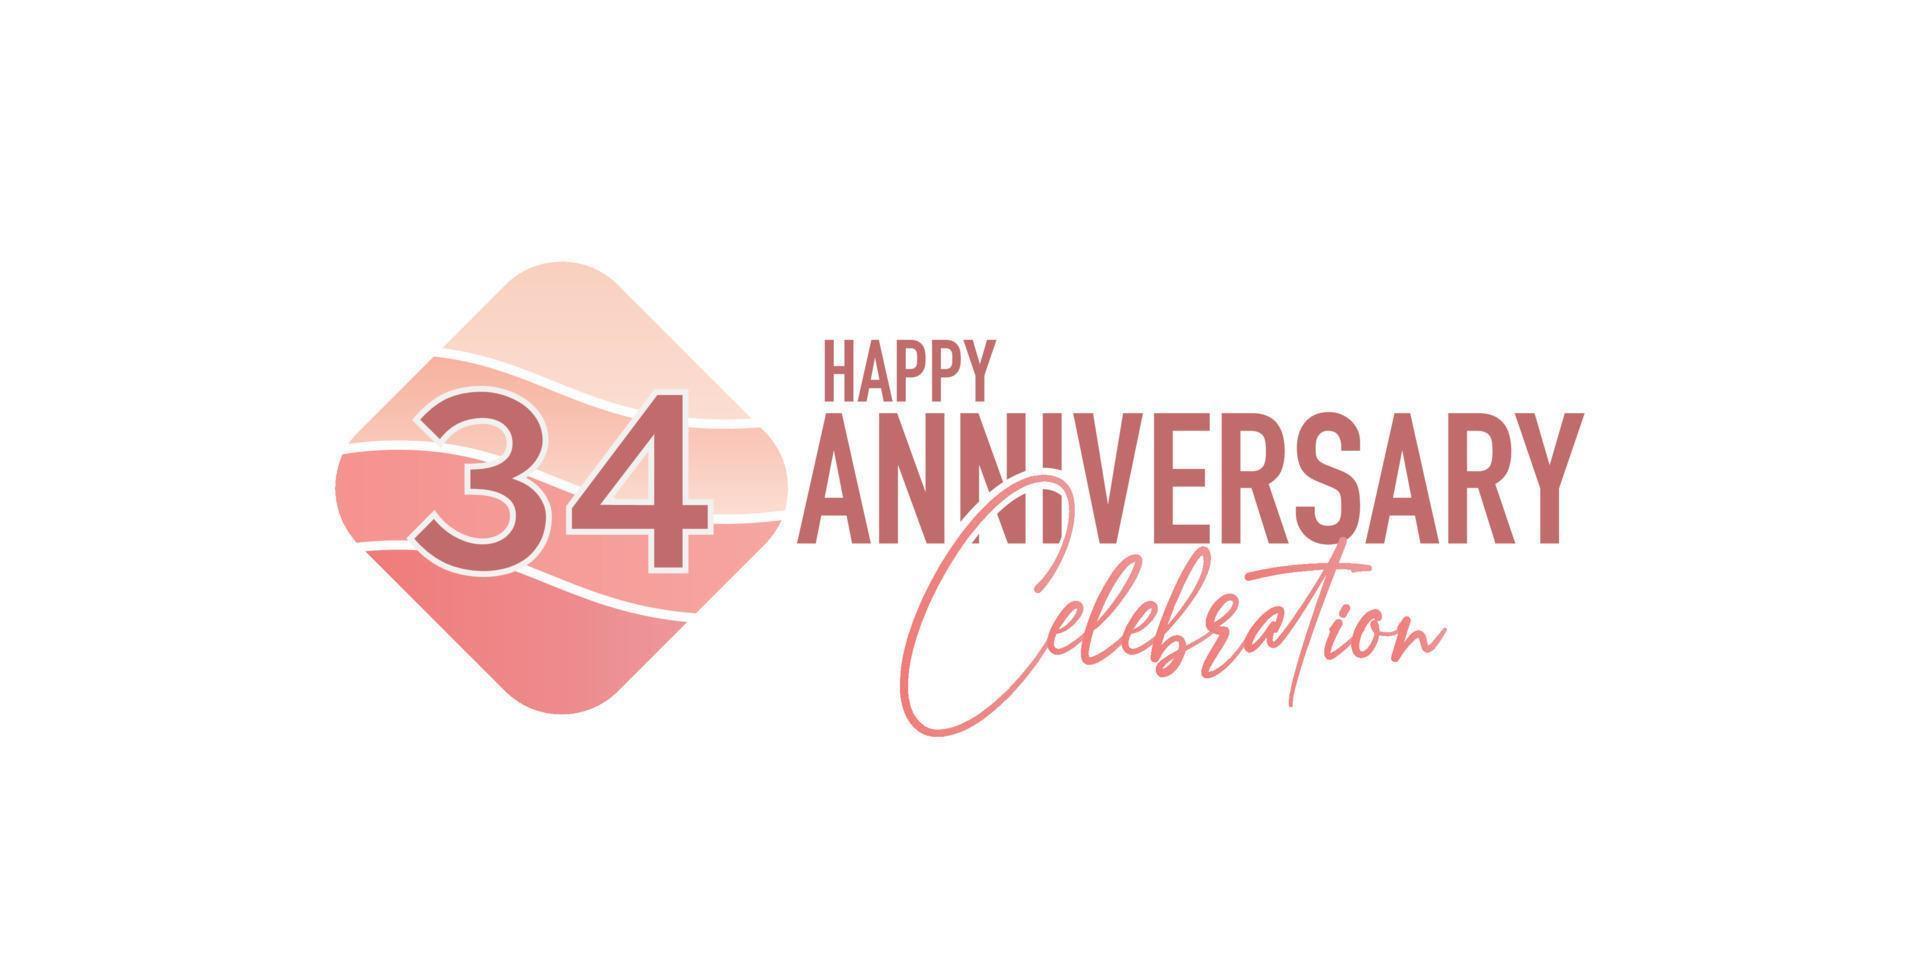 34 years anniversary logo vector illustration design celebration with pink geometric design